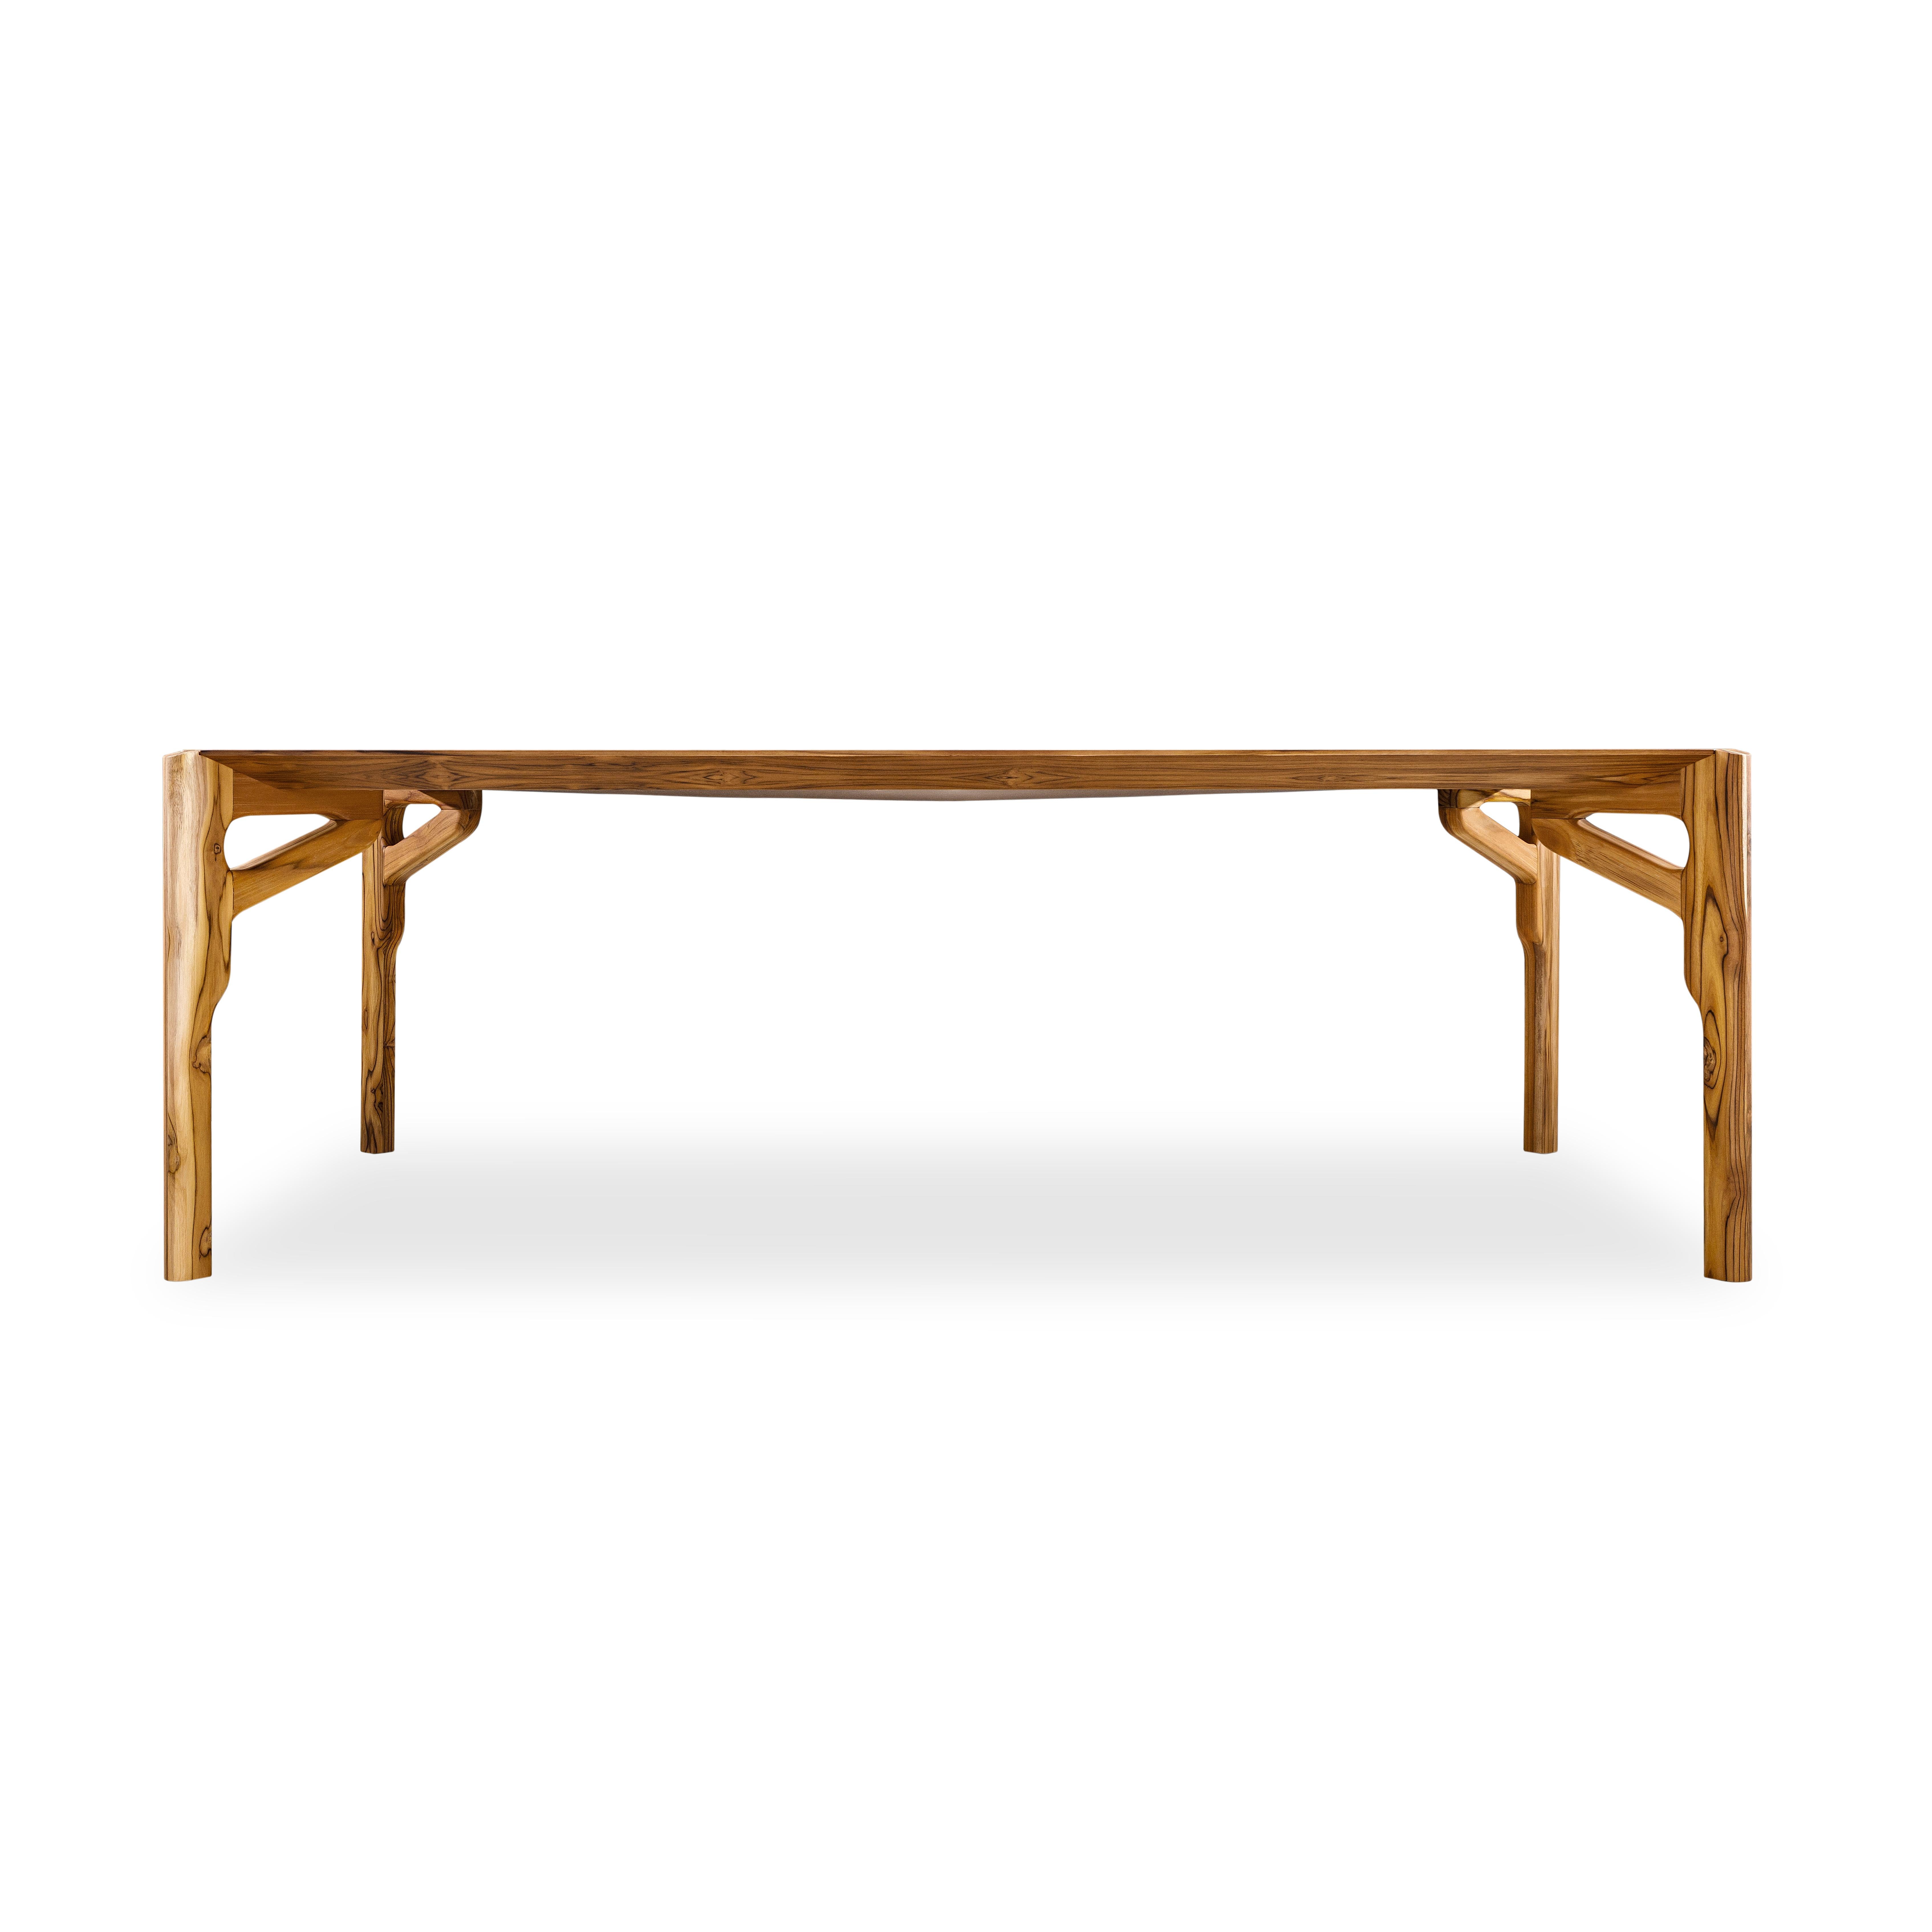 Hardwood Hawk Dining Table with a Teak Wood Veneered Table Top 86'' For Sale